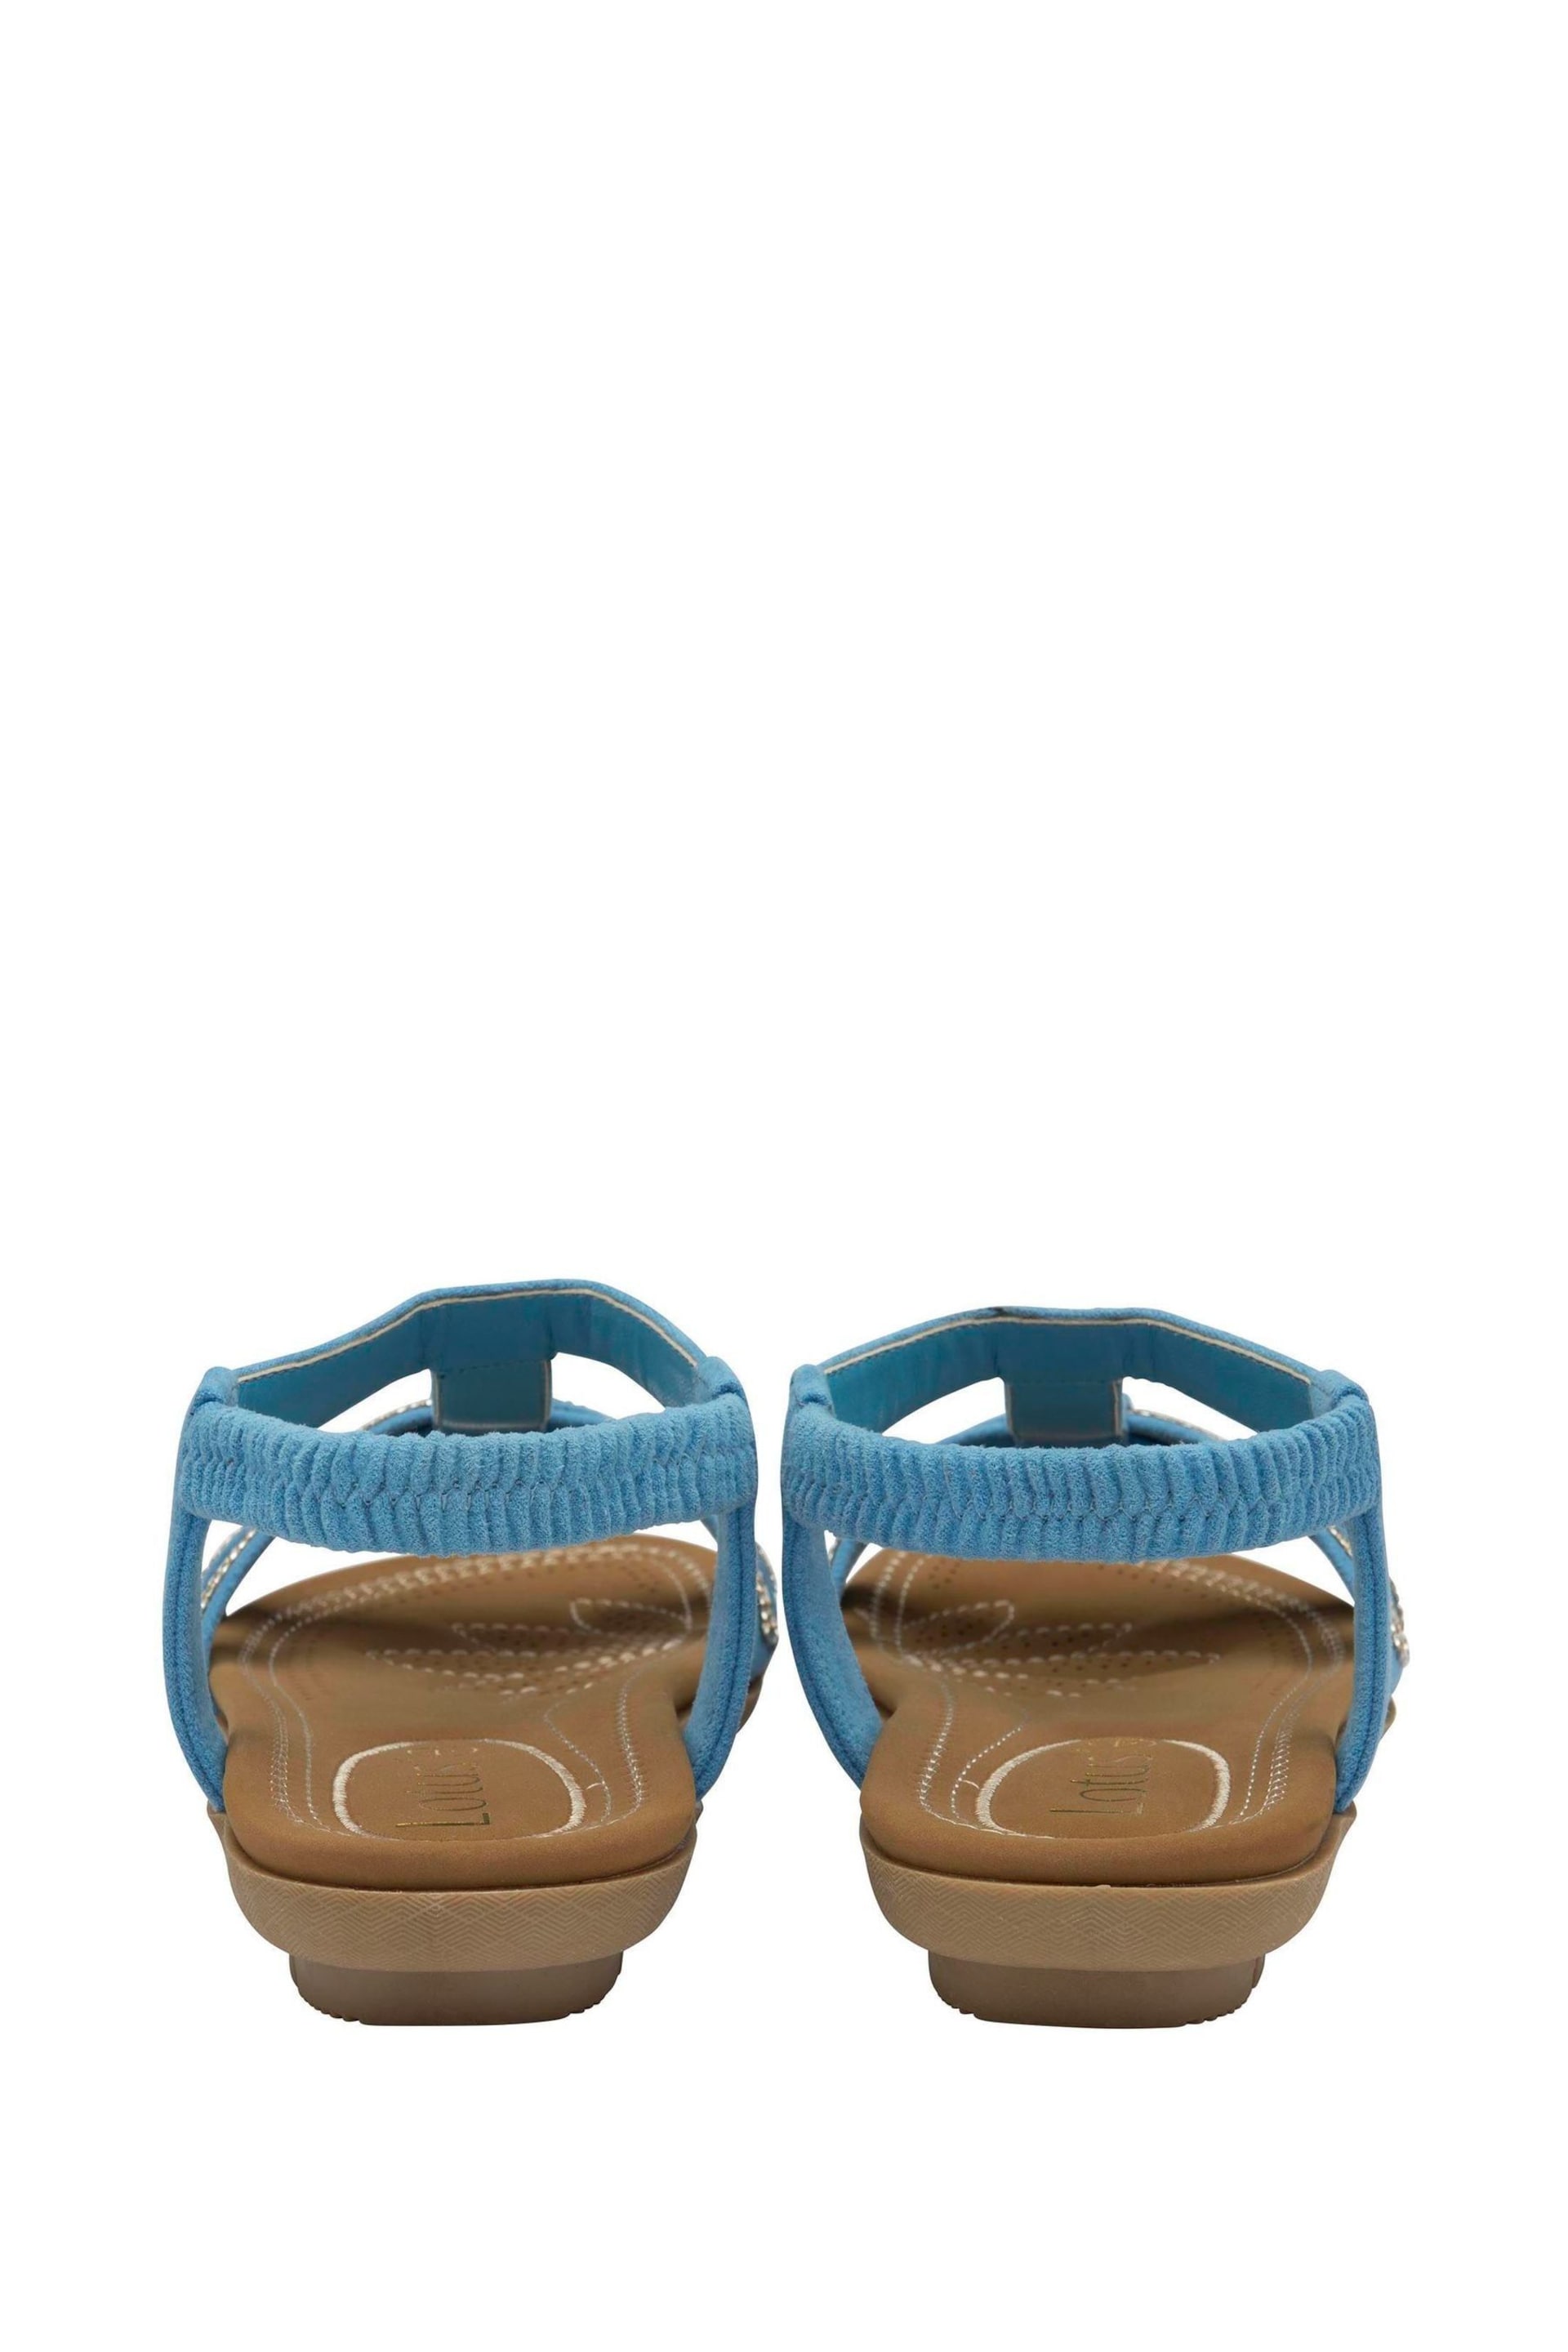 Lotus Blue Open-Toe Flat Sandals - Image 3 of 4